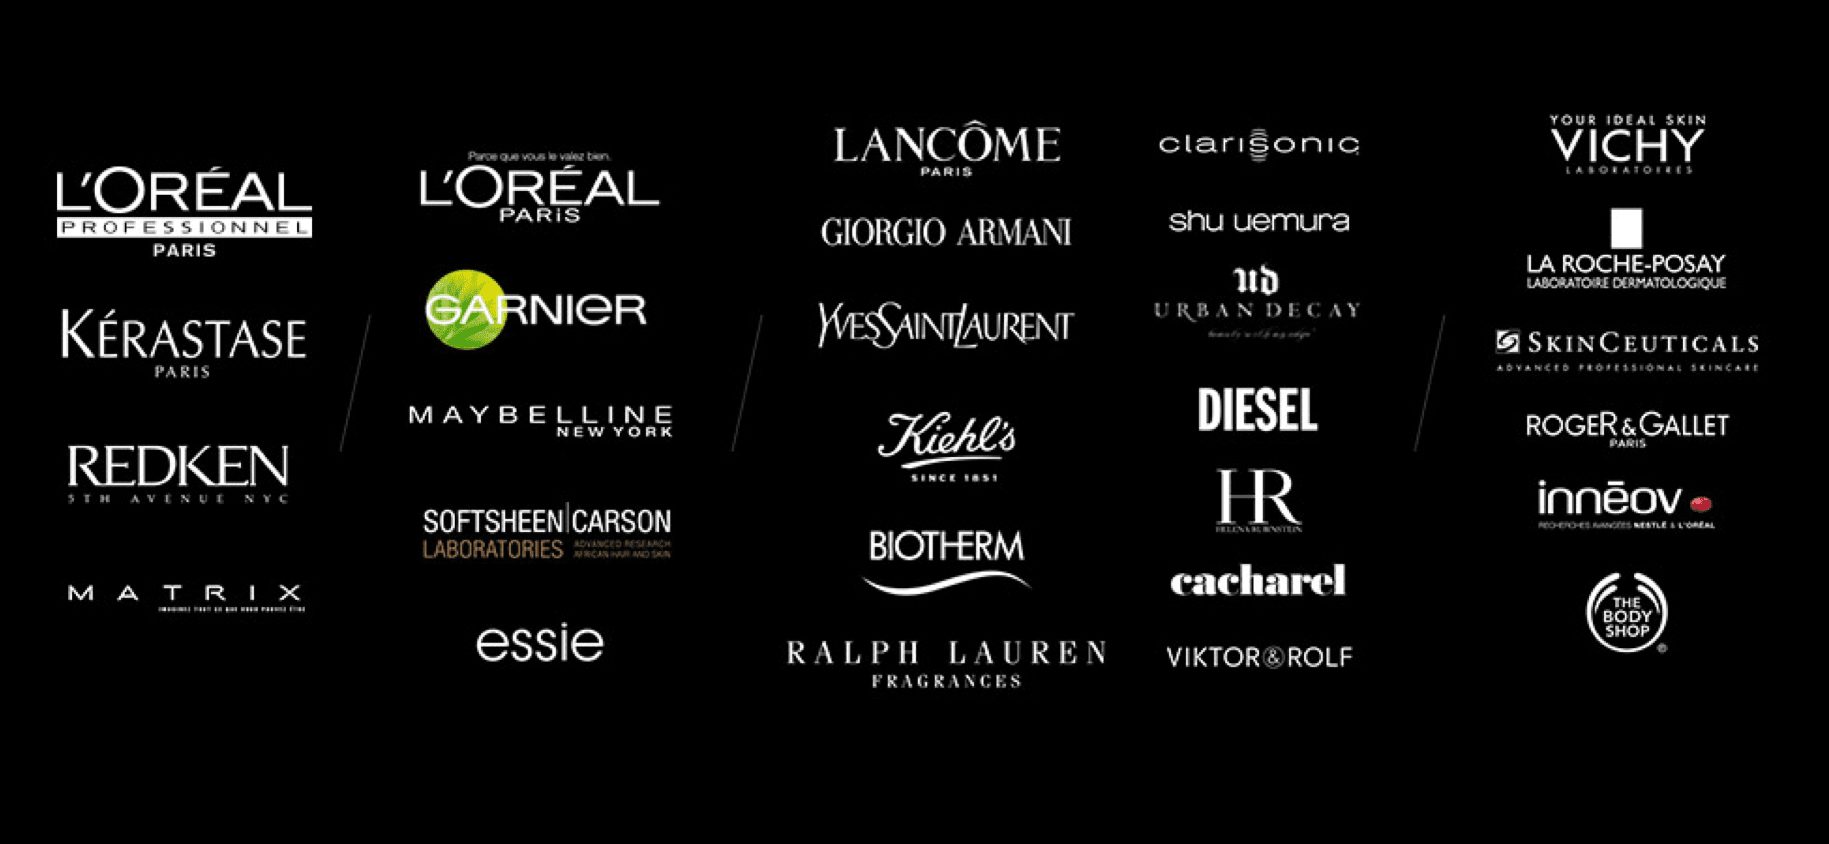 L'Oreal brands